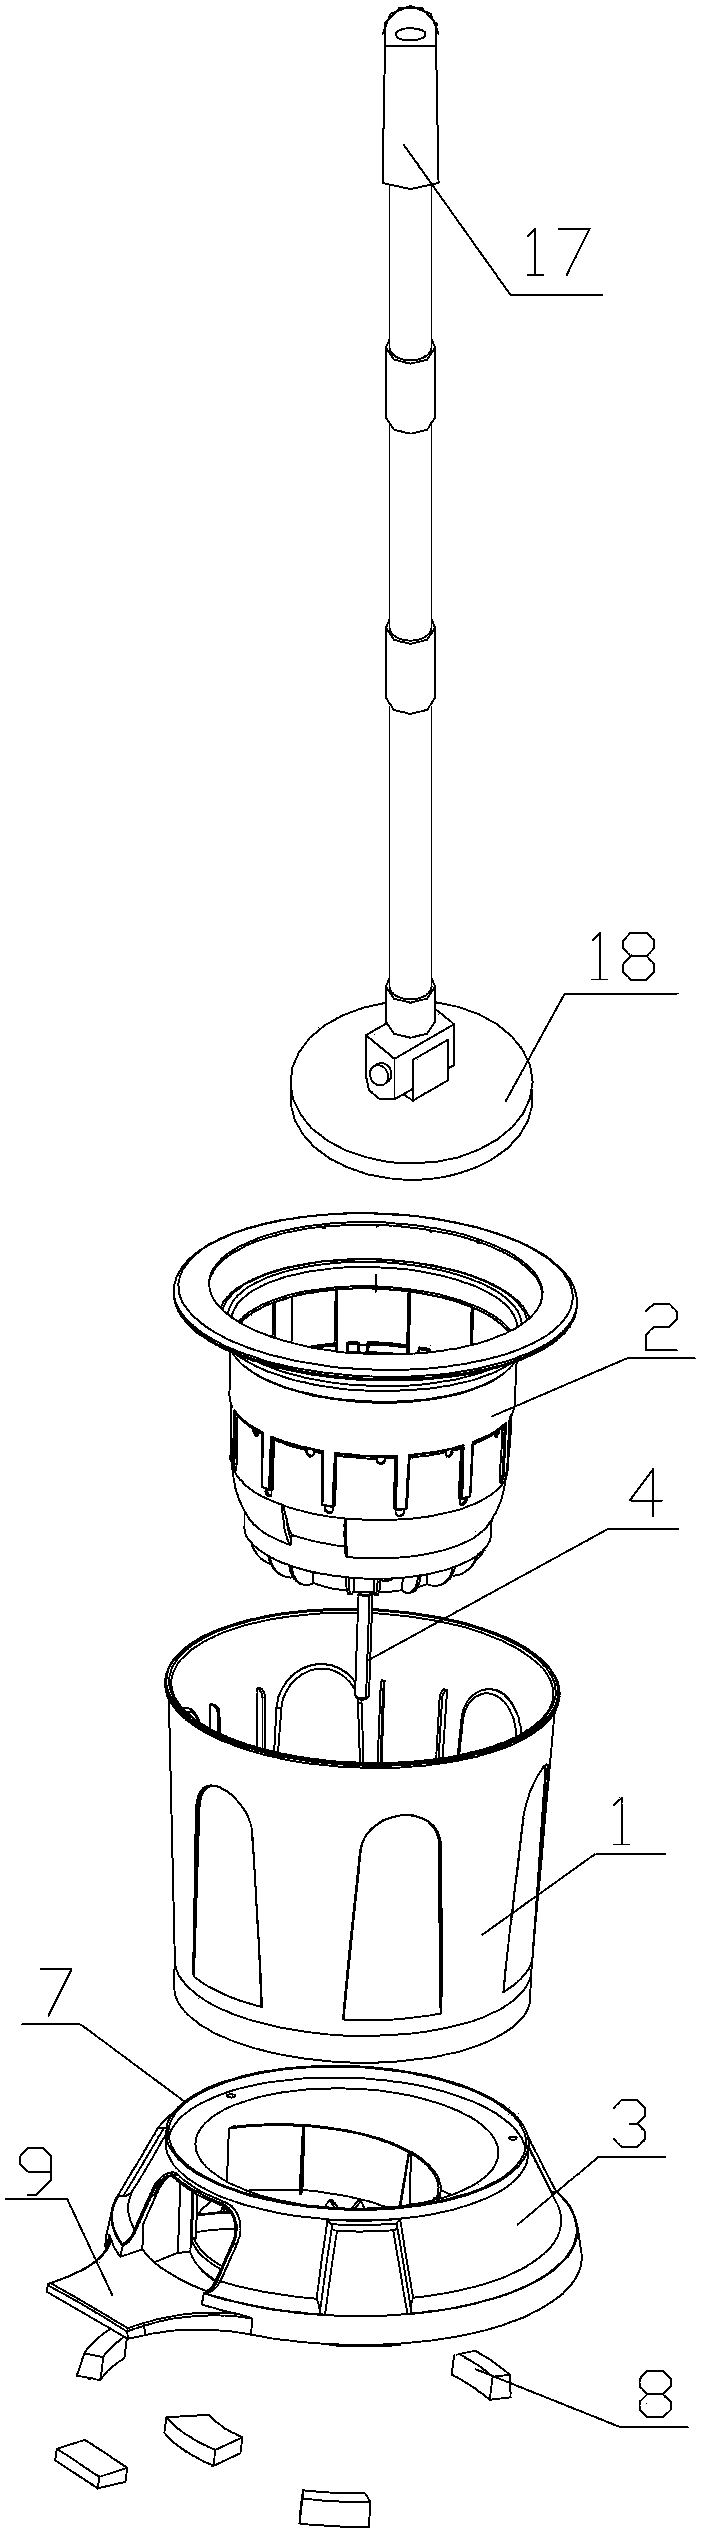 Manual draining device